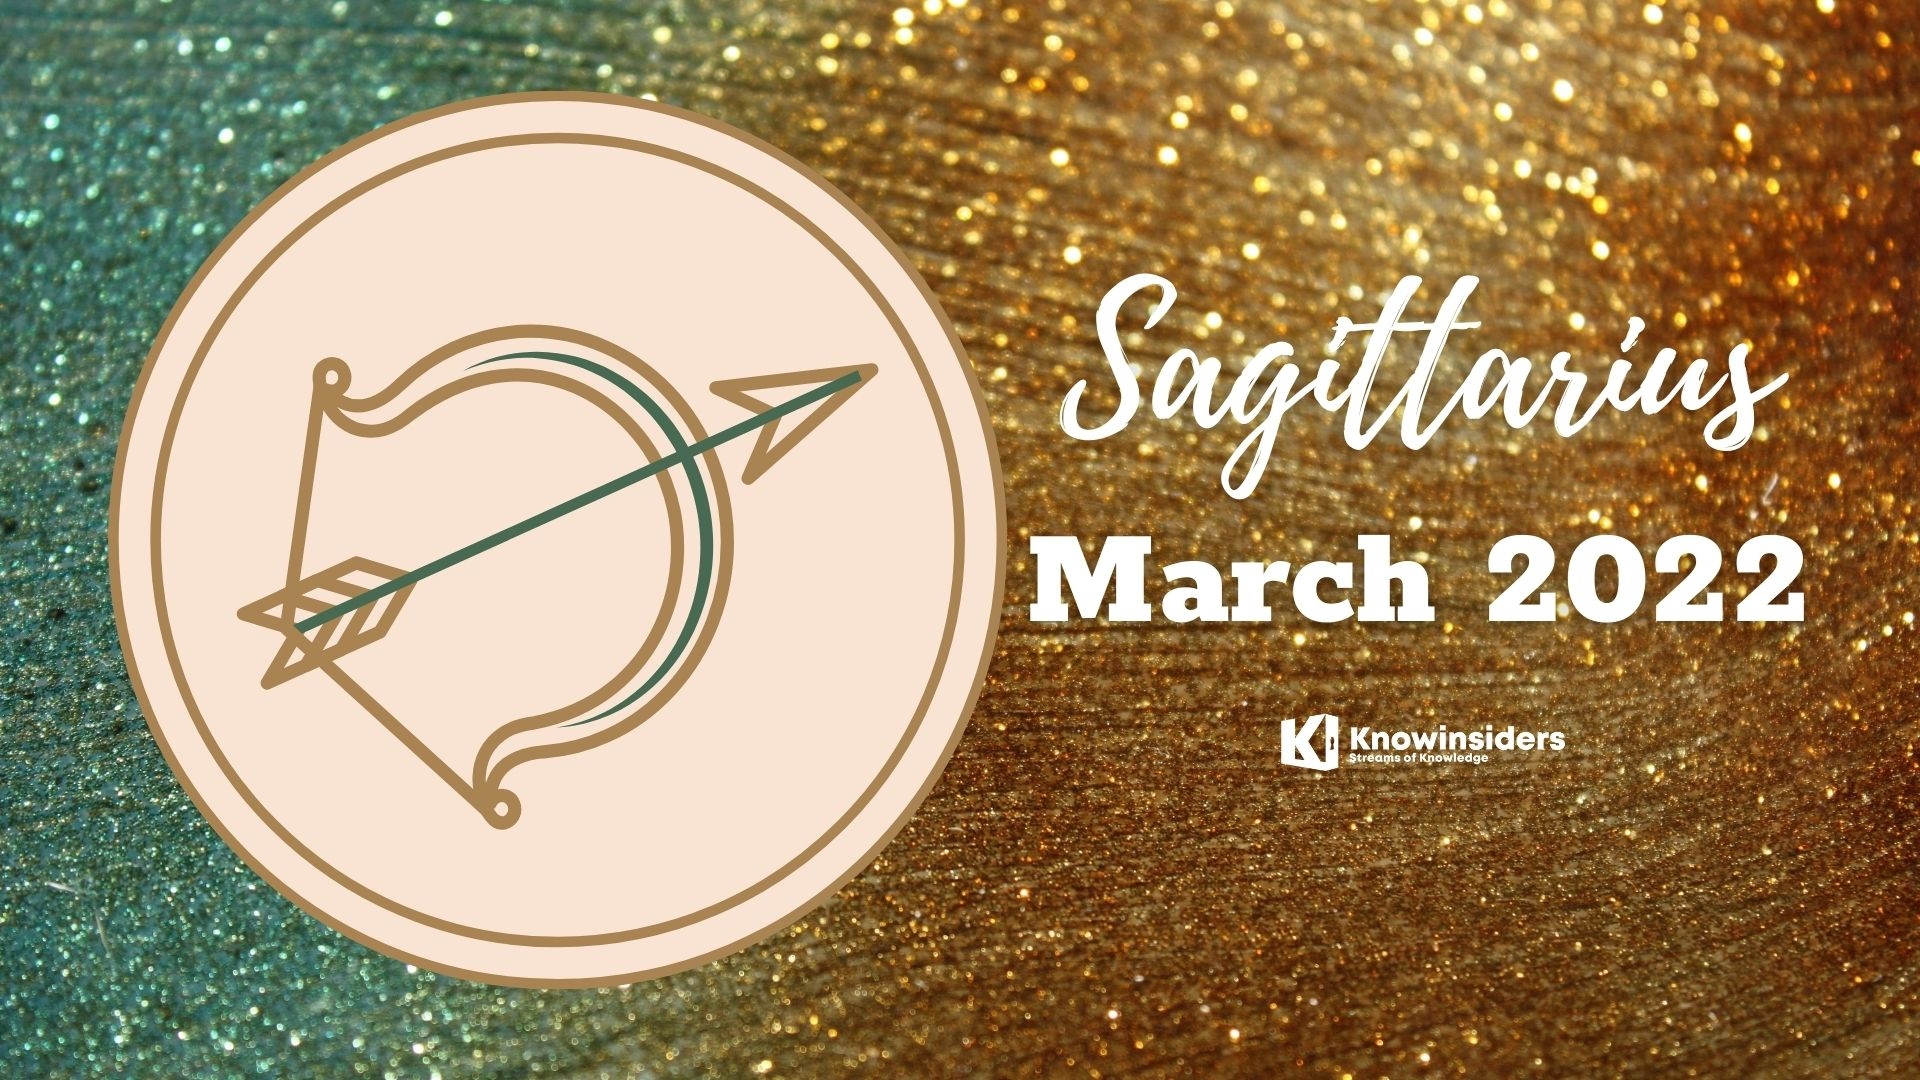 SAGITTARIUS March 2022 Horoscope: Astrological Prediction for Love, Career, Money and Health